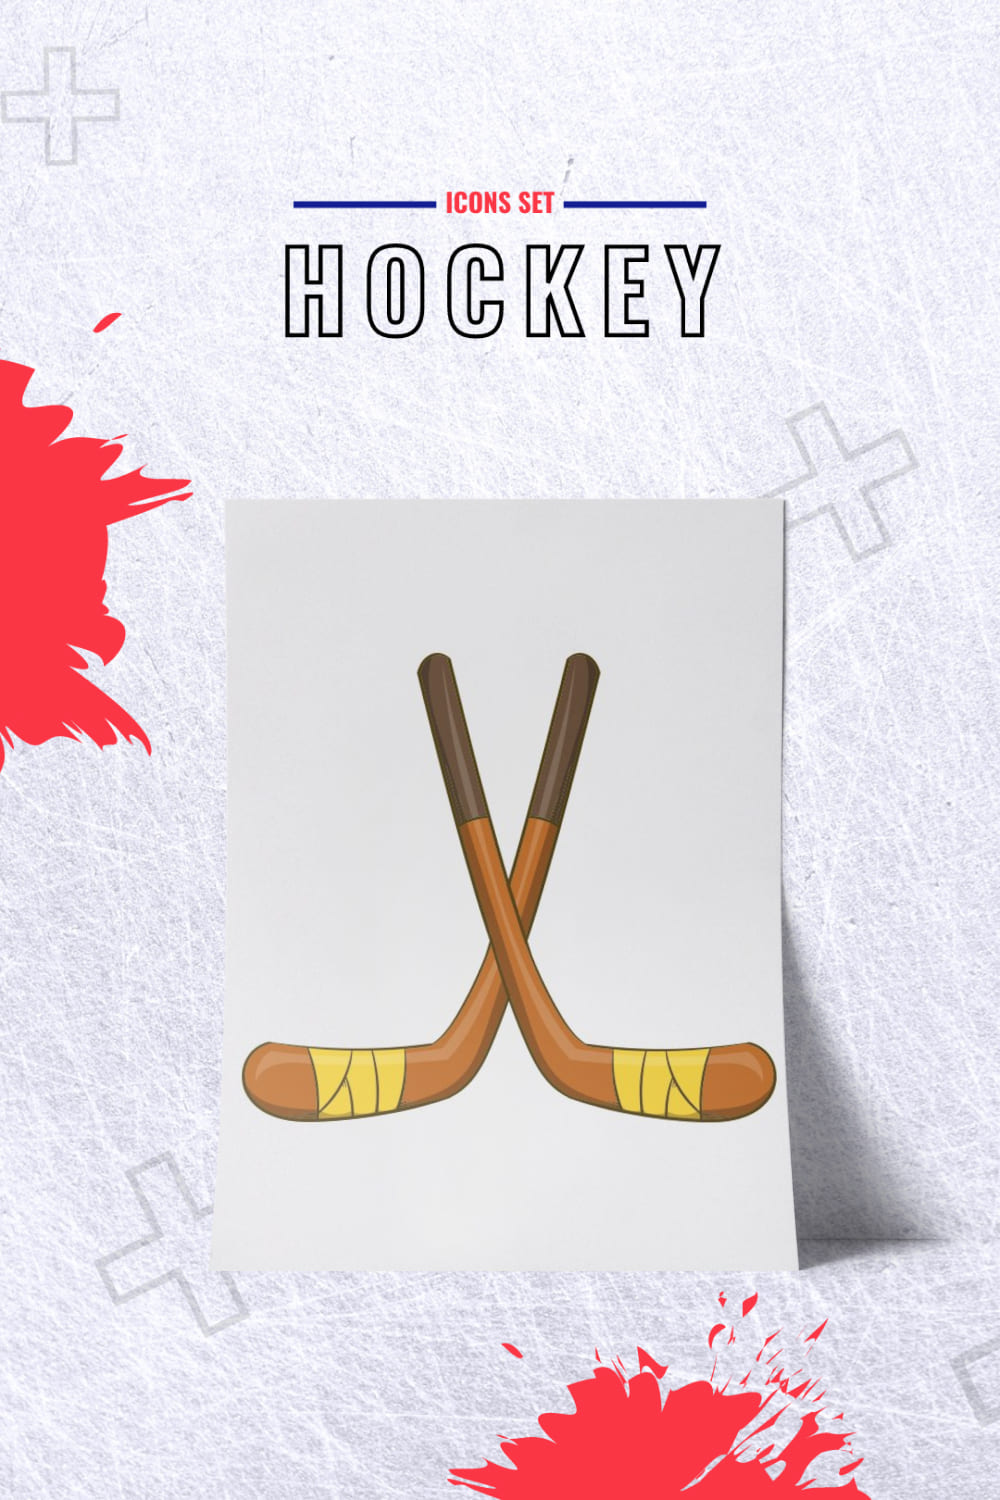 Hockey Icons Set, Cartoon Style - Pinterest.